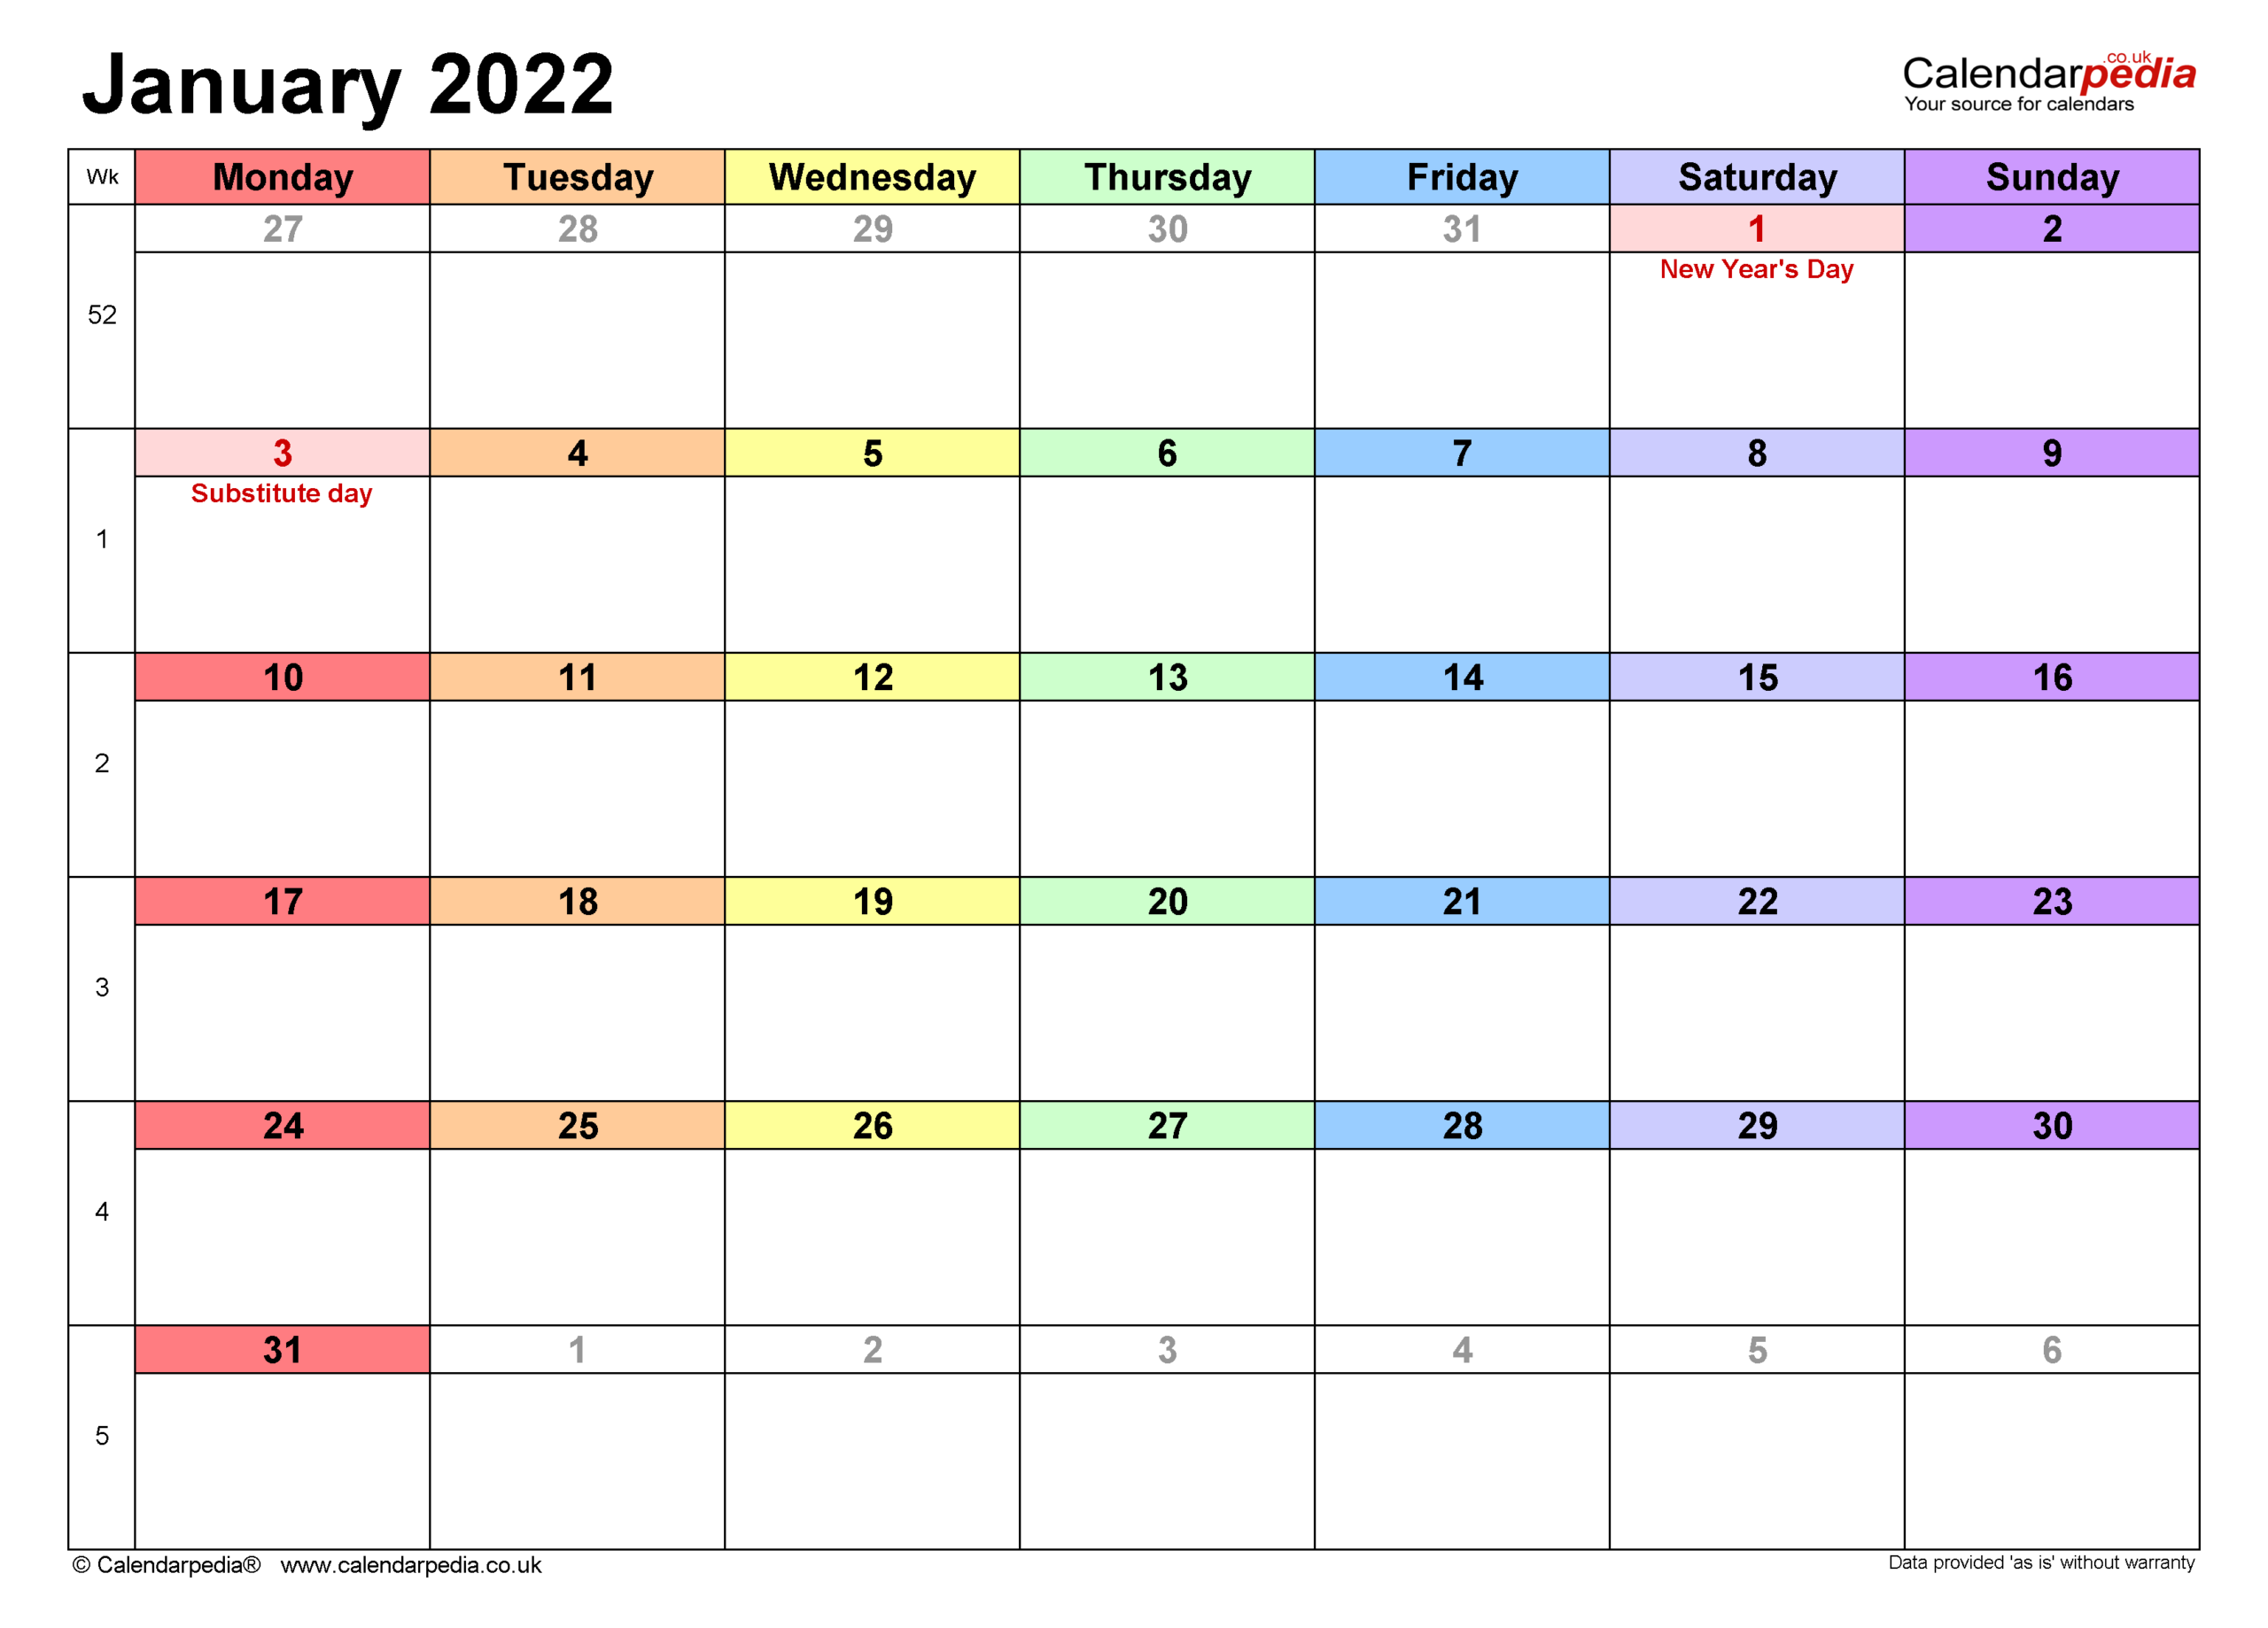 Get Calendar 2022 January Pdf